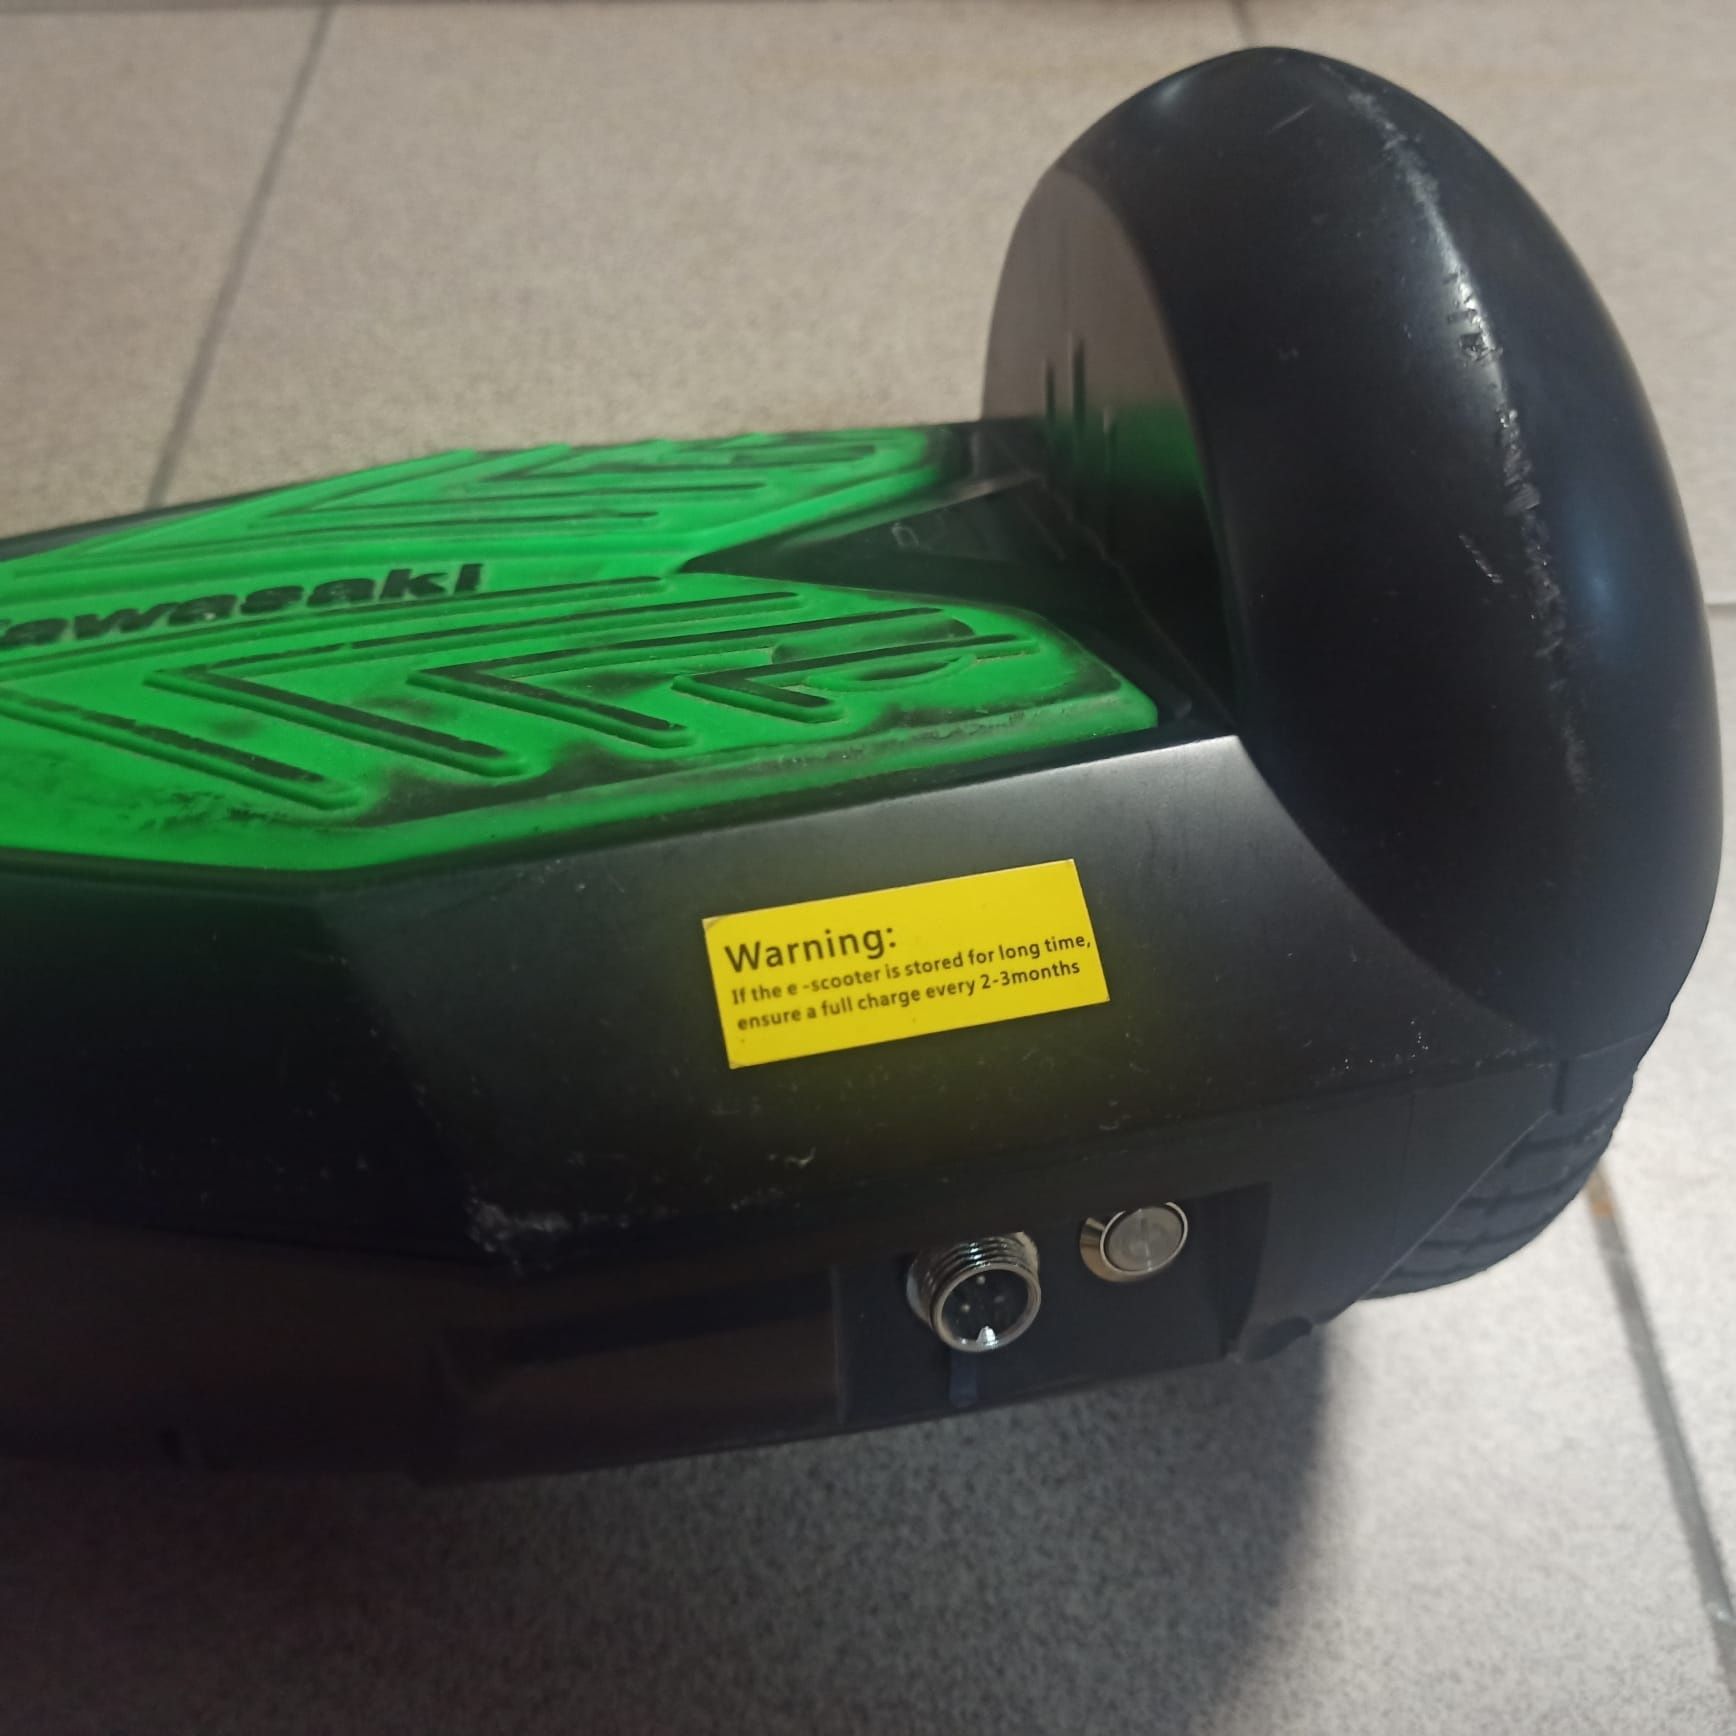 Deskorolka elektryczna / hoverboard Kawasaki KX-pro 6.5a